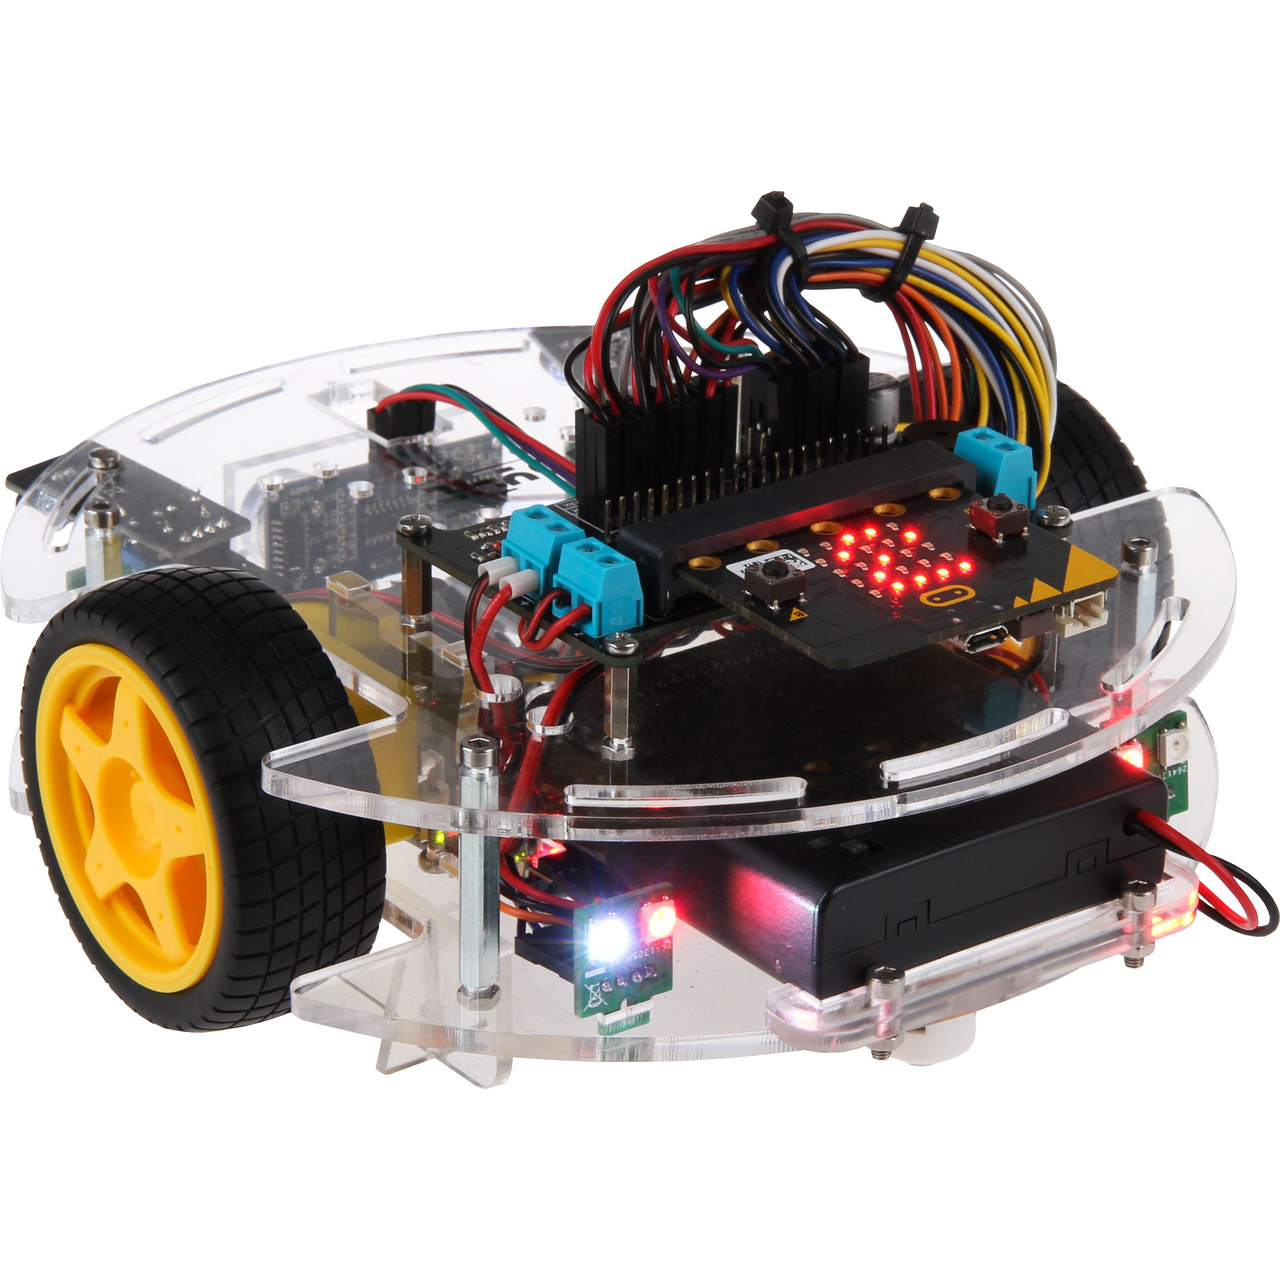 Joy-IT programmierbares Roboterauto Joy-Car- BBC micro:bit